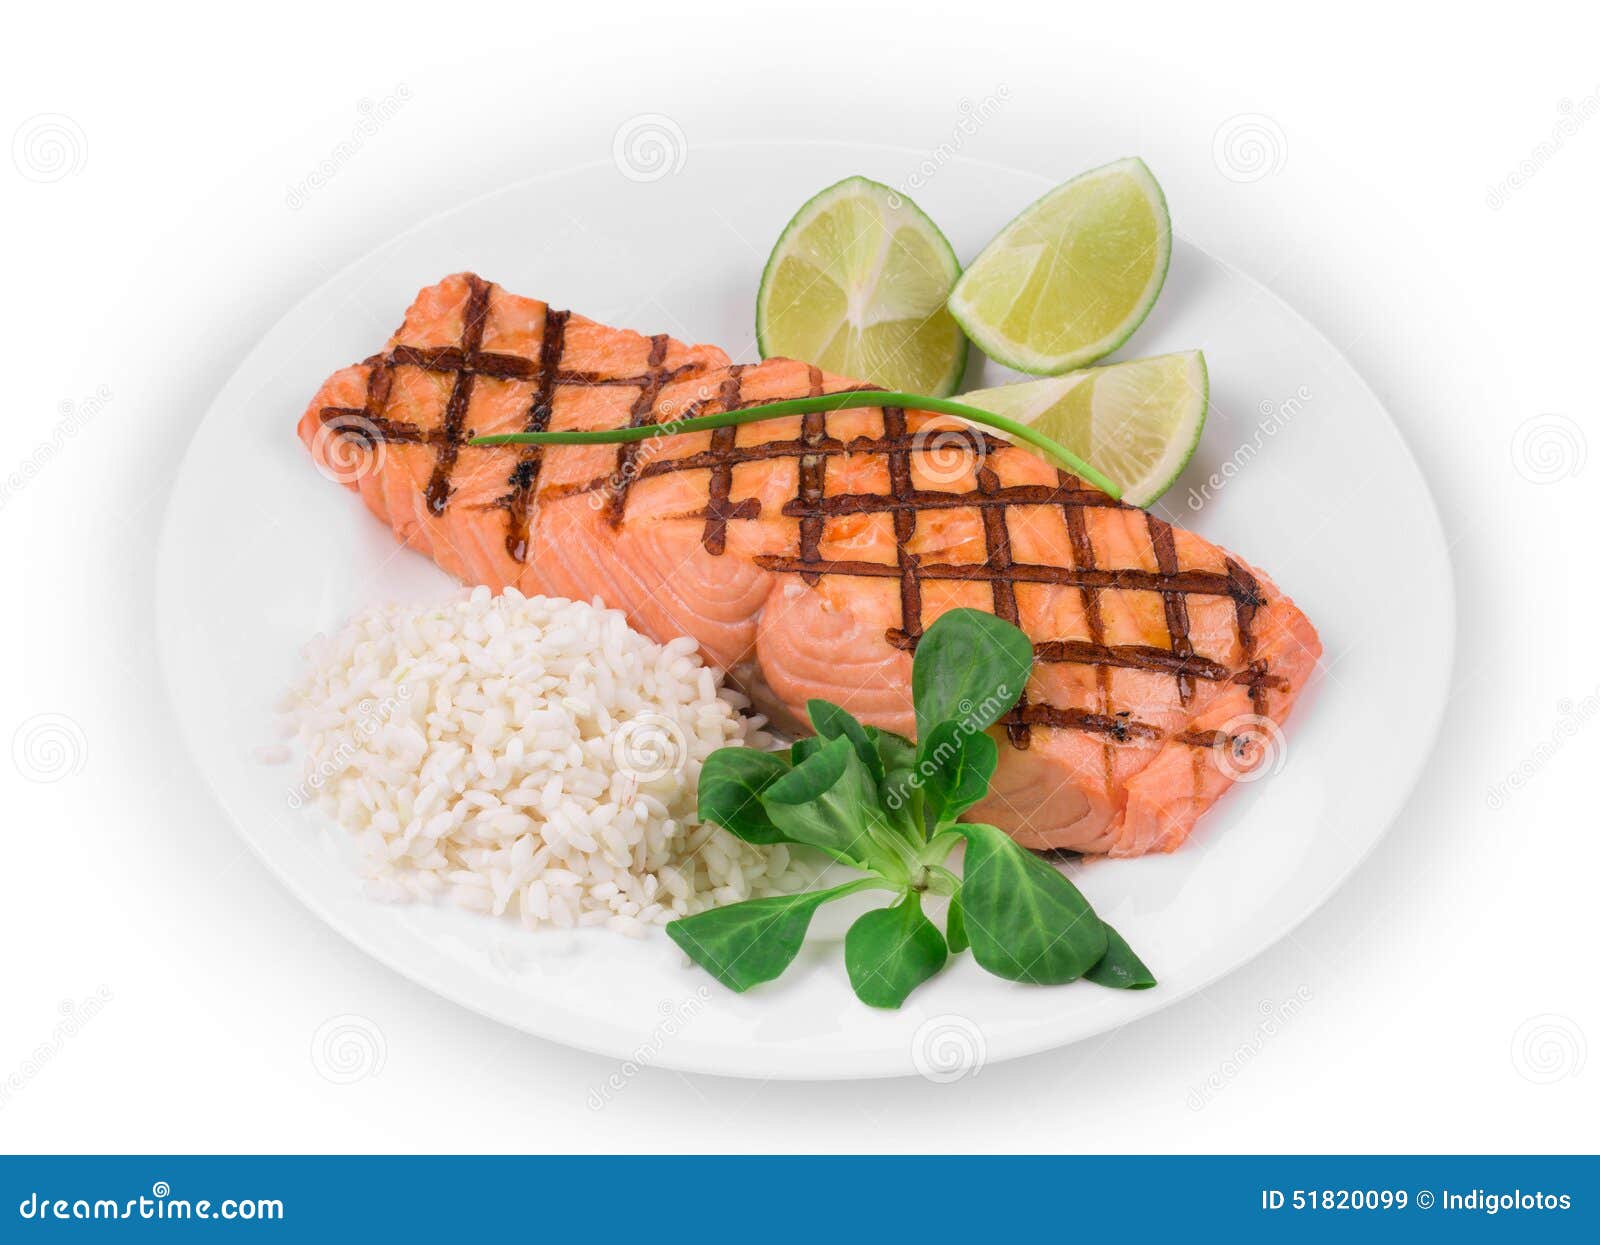 Roasted salmon fillets stock image. Image of restaurant - 51820099